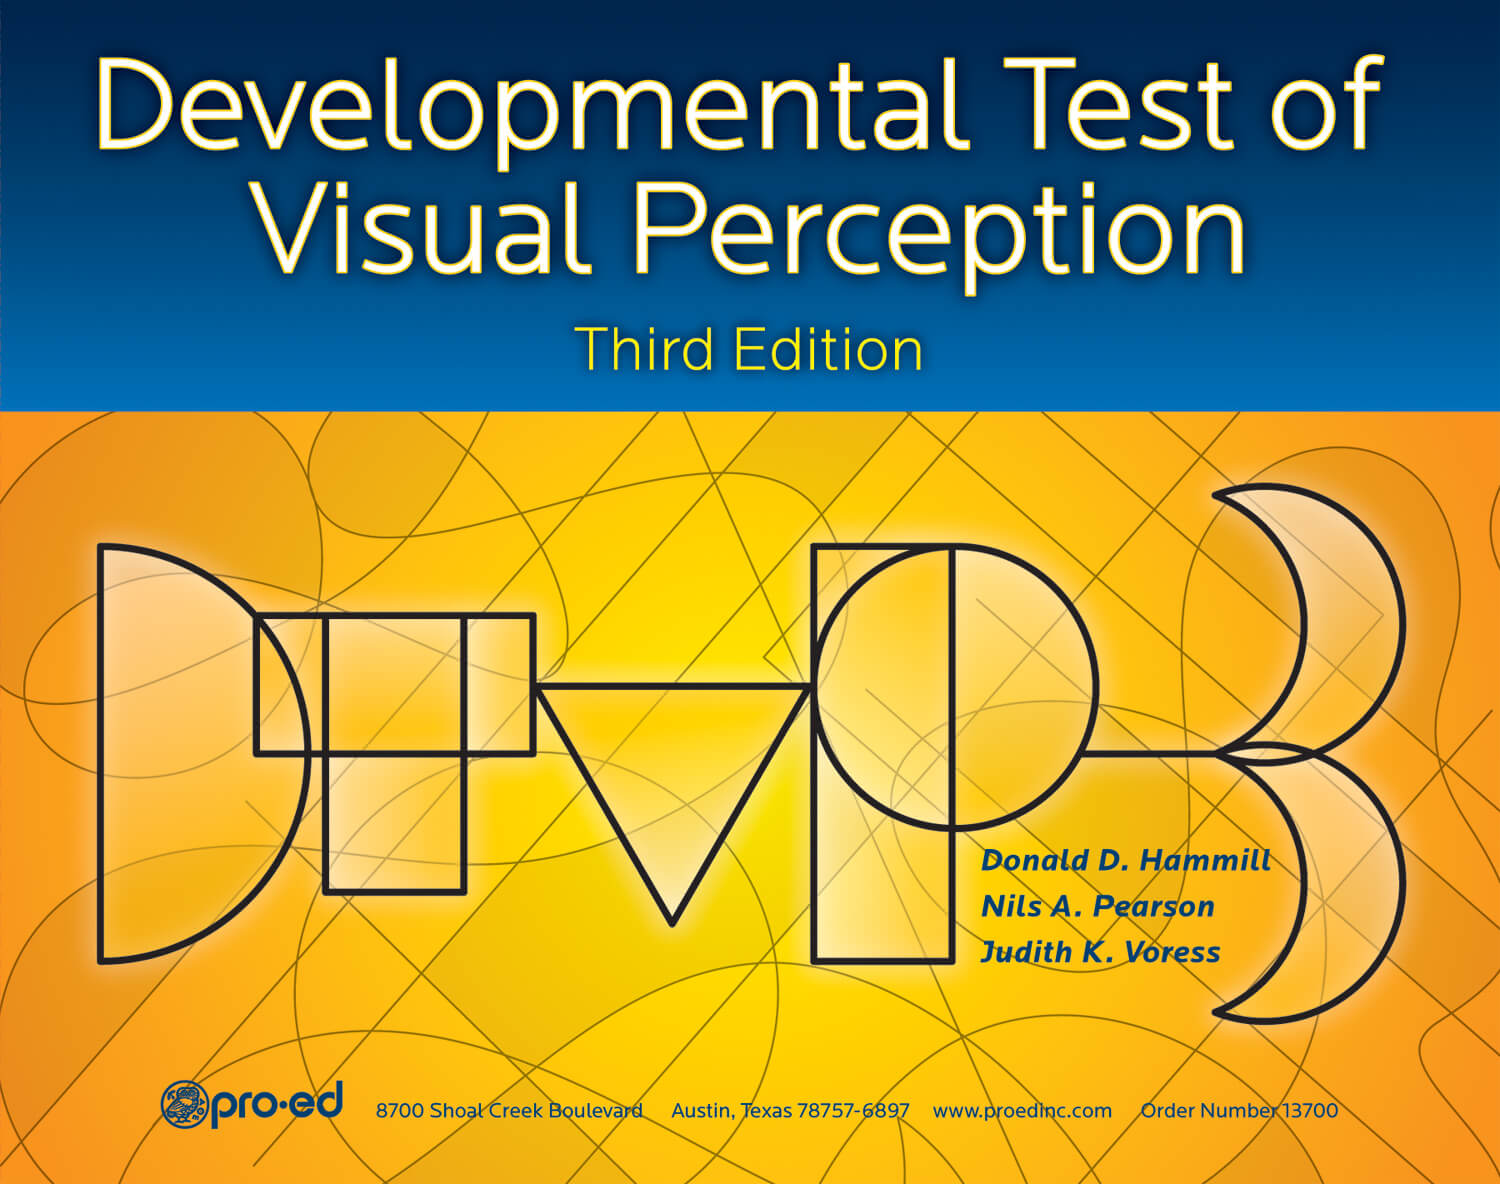 DTVP-3 Developmental Test of Visual Perception 3rd Ed - 